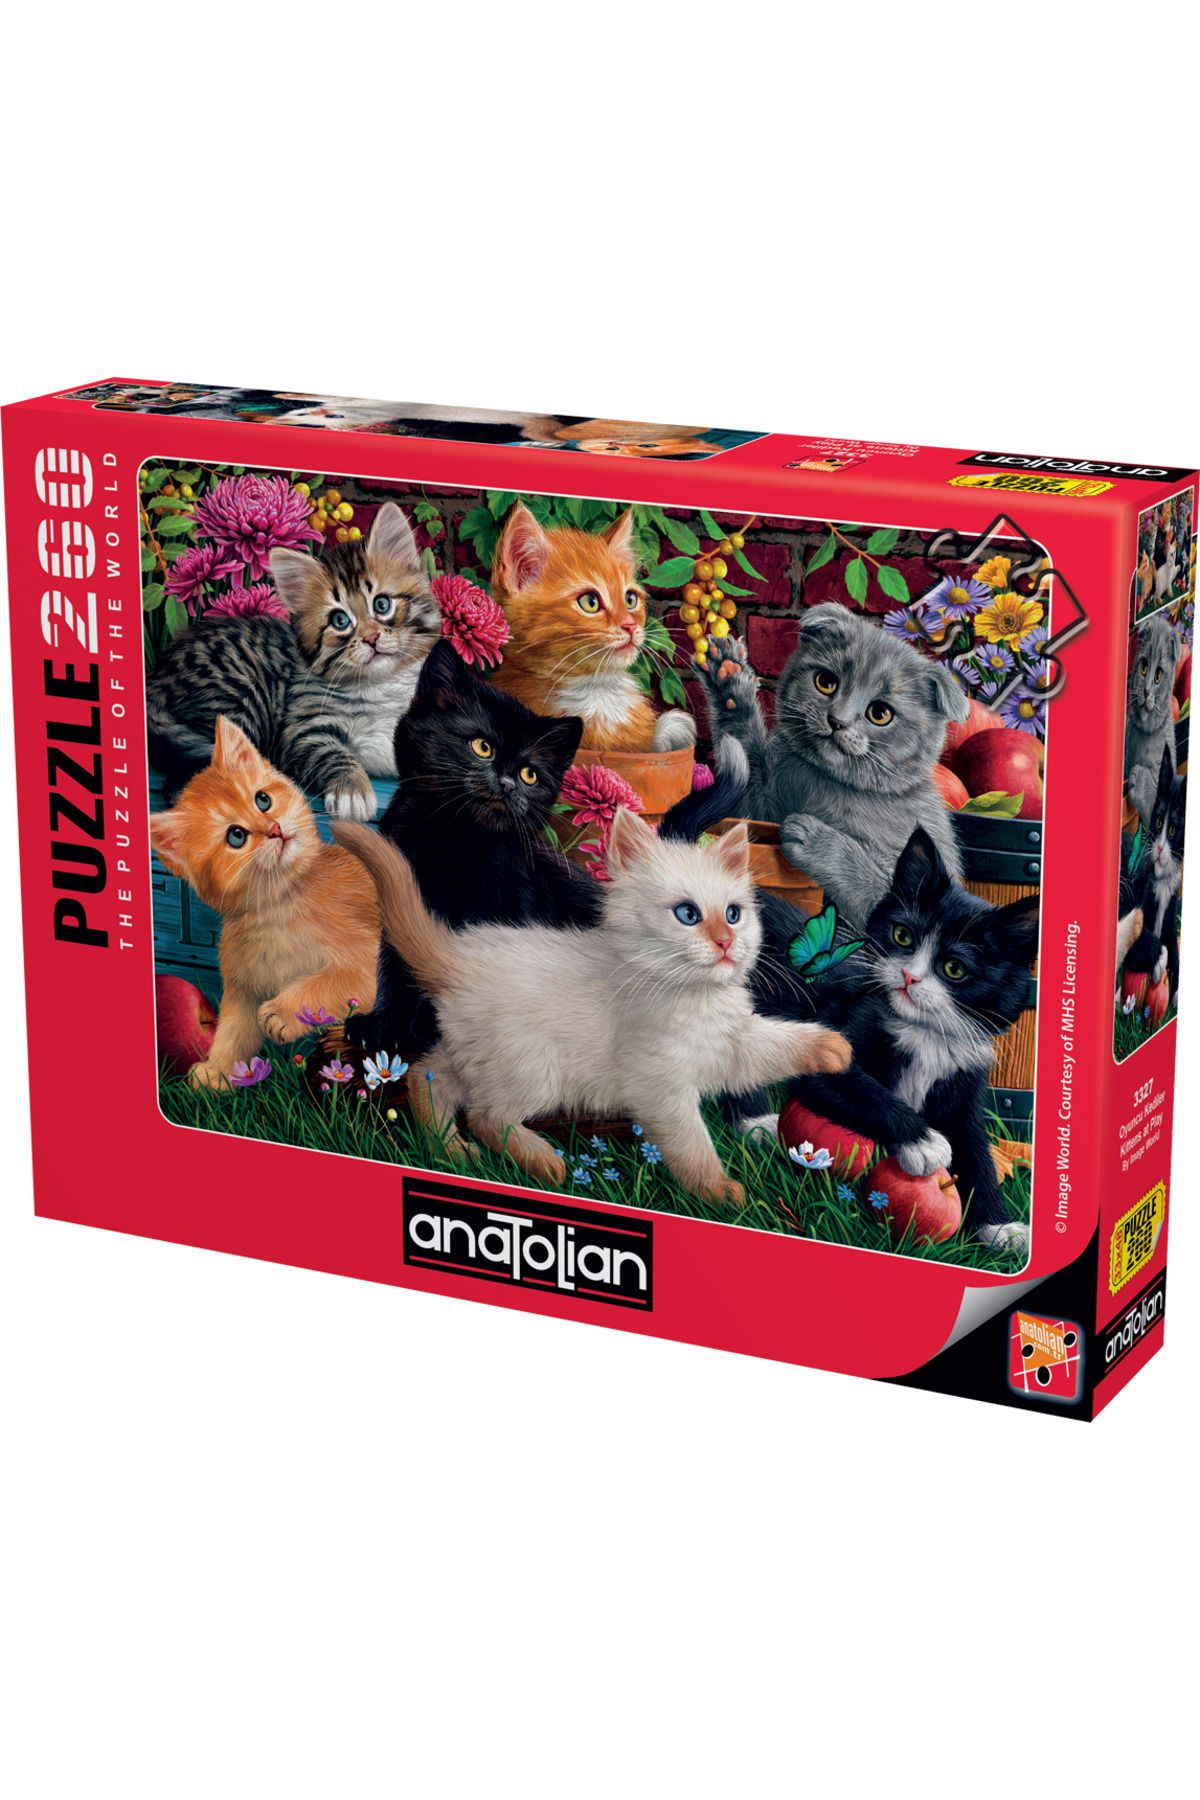 Anatolian Puzzle 260 Parçalık Puzzle / Oyuncu Kediler - Kod:3327